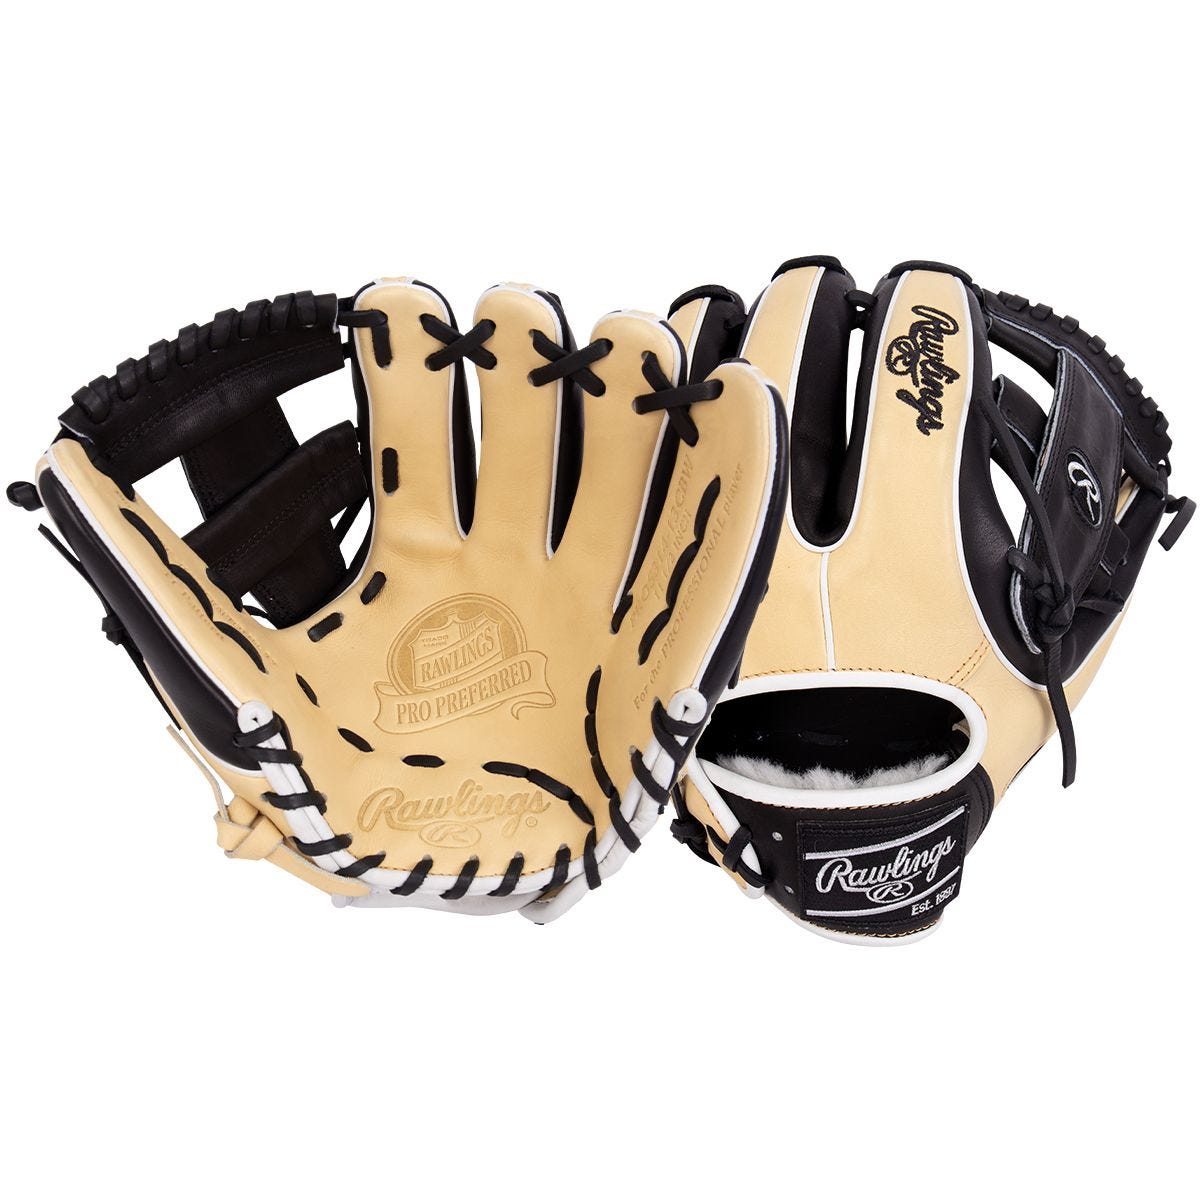 Rawlings Pro Preferred 11.5 Infield Baseball Glove: PROS314-13CBW